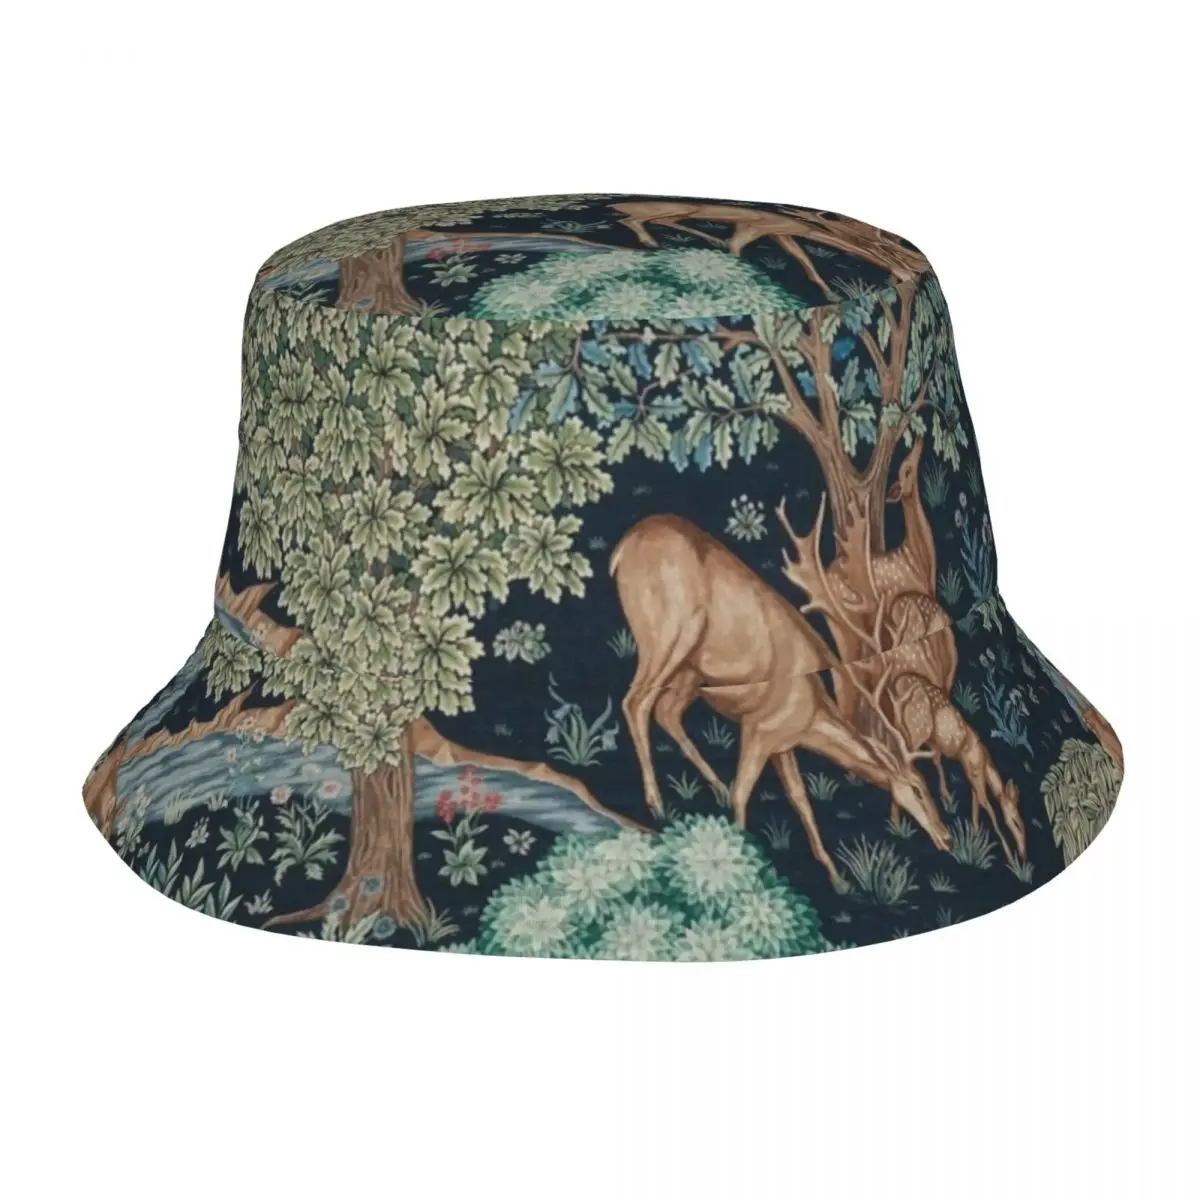 Custom William Morris Deer Bucket Hats Women Men Fashion Summer Beach Sun Textile Pattern Fisherman Cap